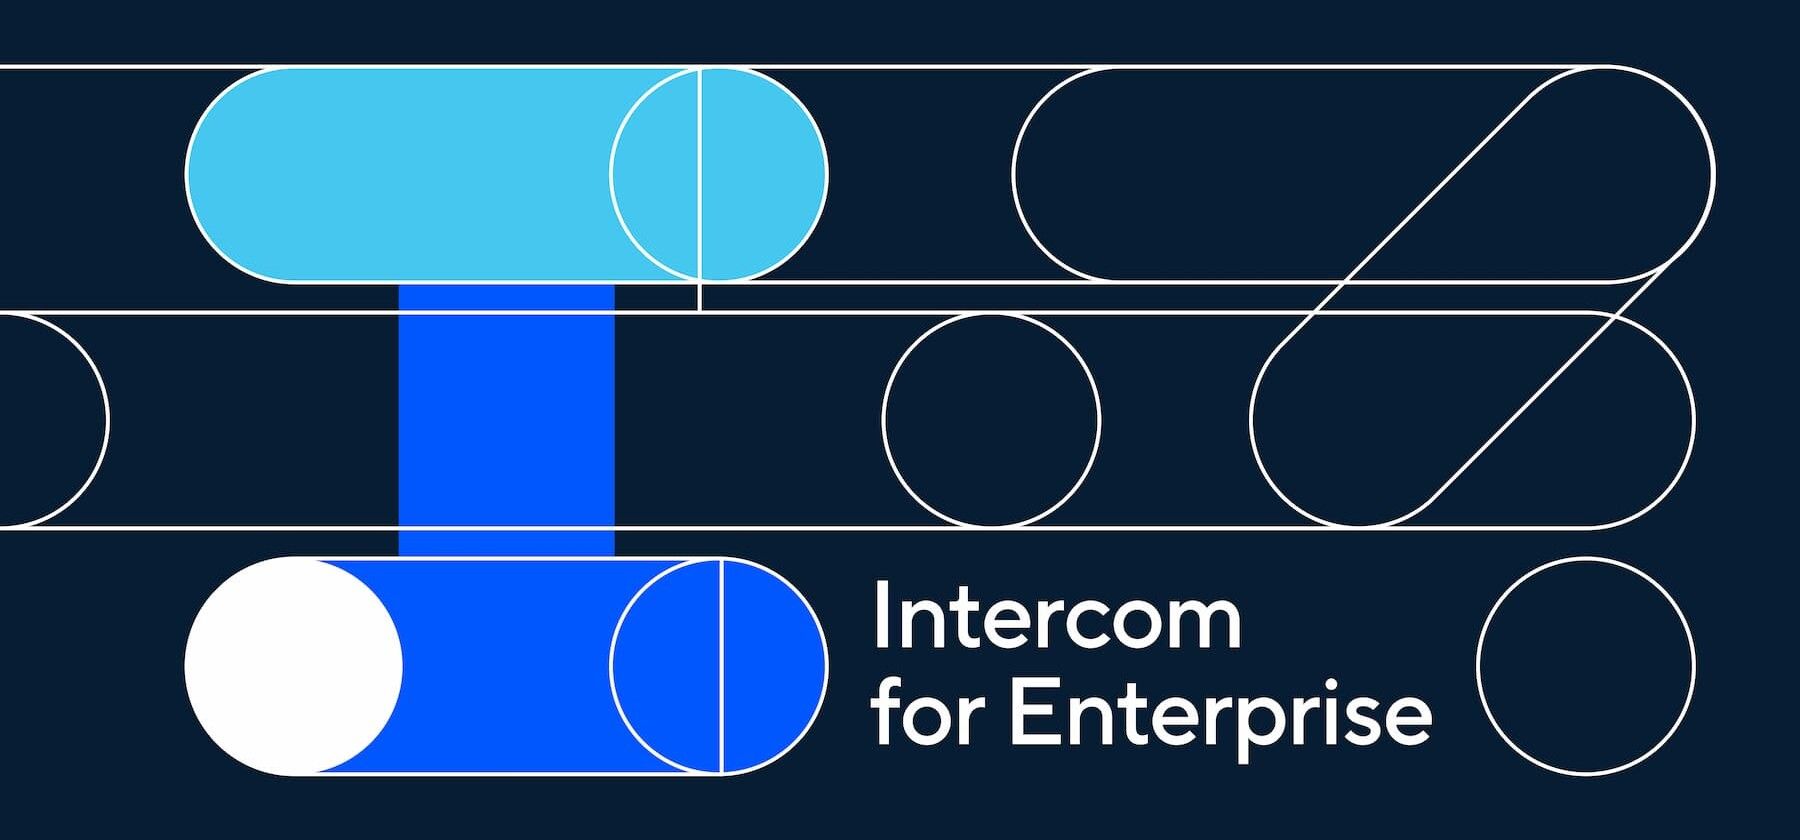 Intercom for Enterprise - Infrastructure & Scale